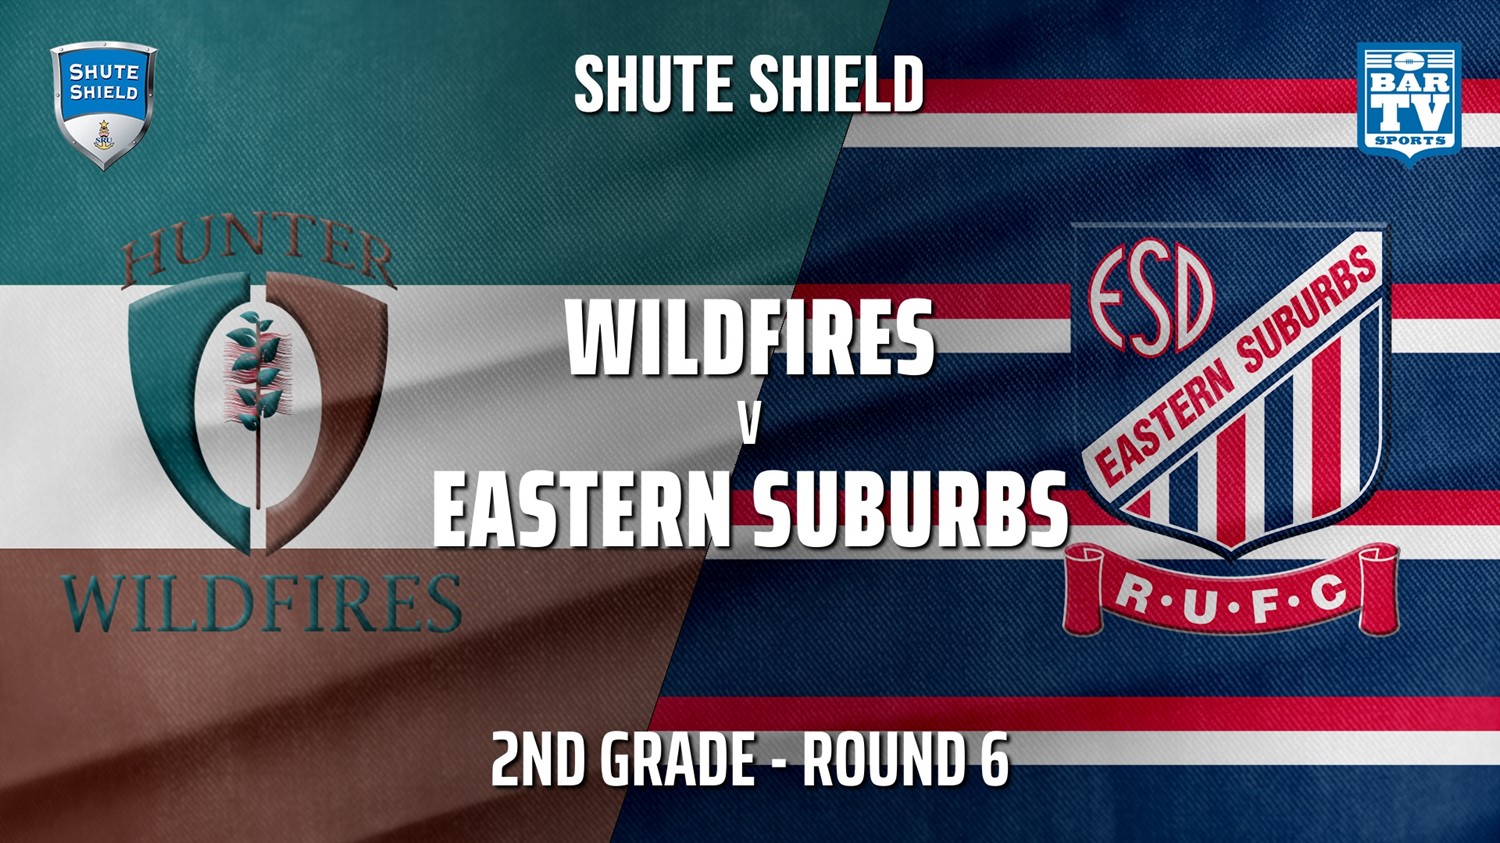 210523-Shute Shield Round 6 - 2nd Grade - Hunter Wildfires v Eastern Suburbs Sydney Slate Image